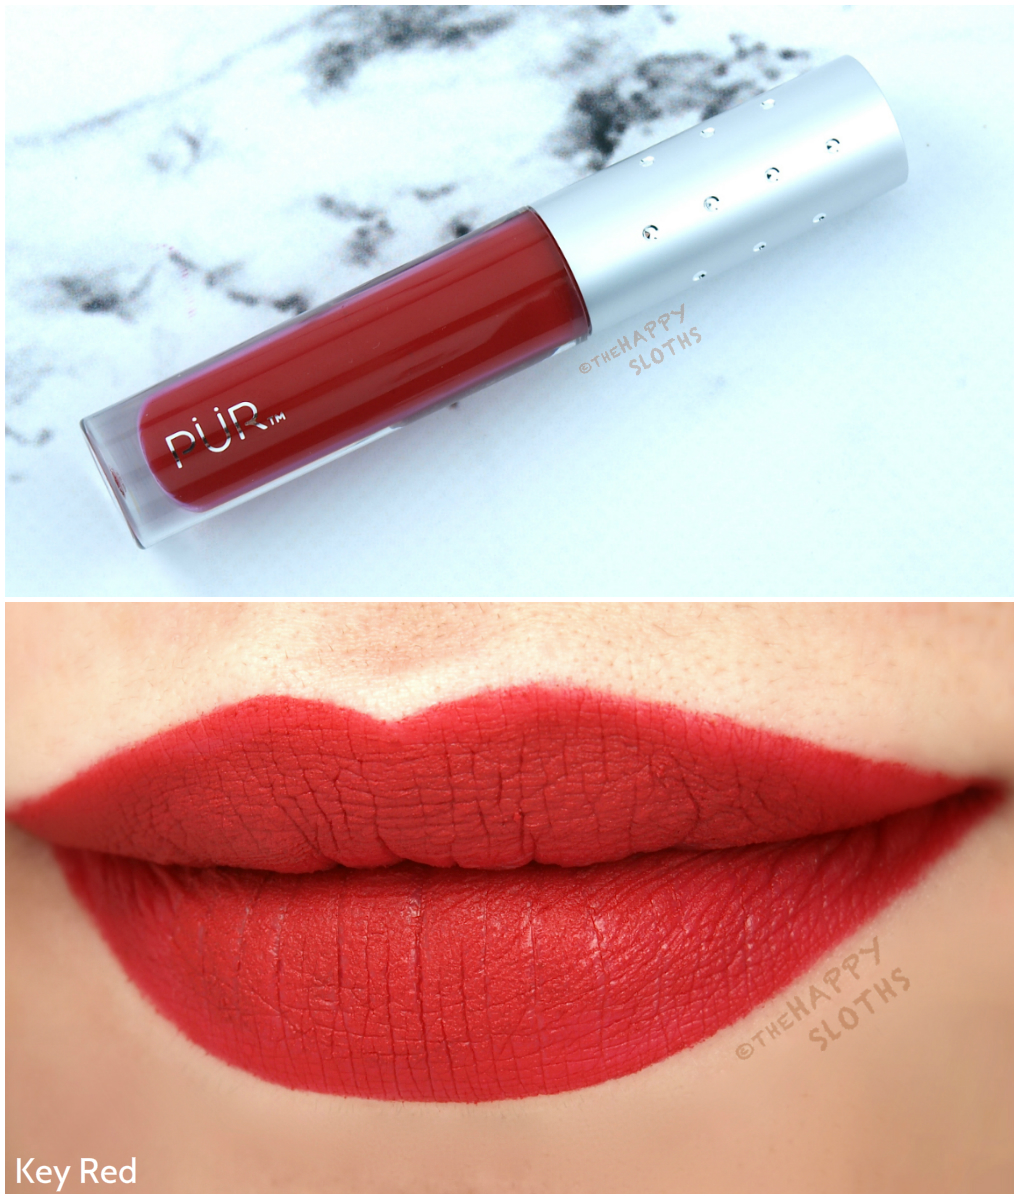 Pur Velvet Liquid Lipstick in Key Red